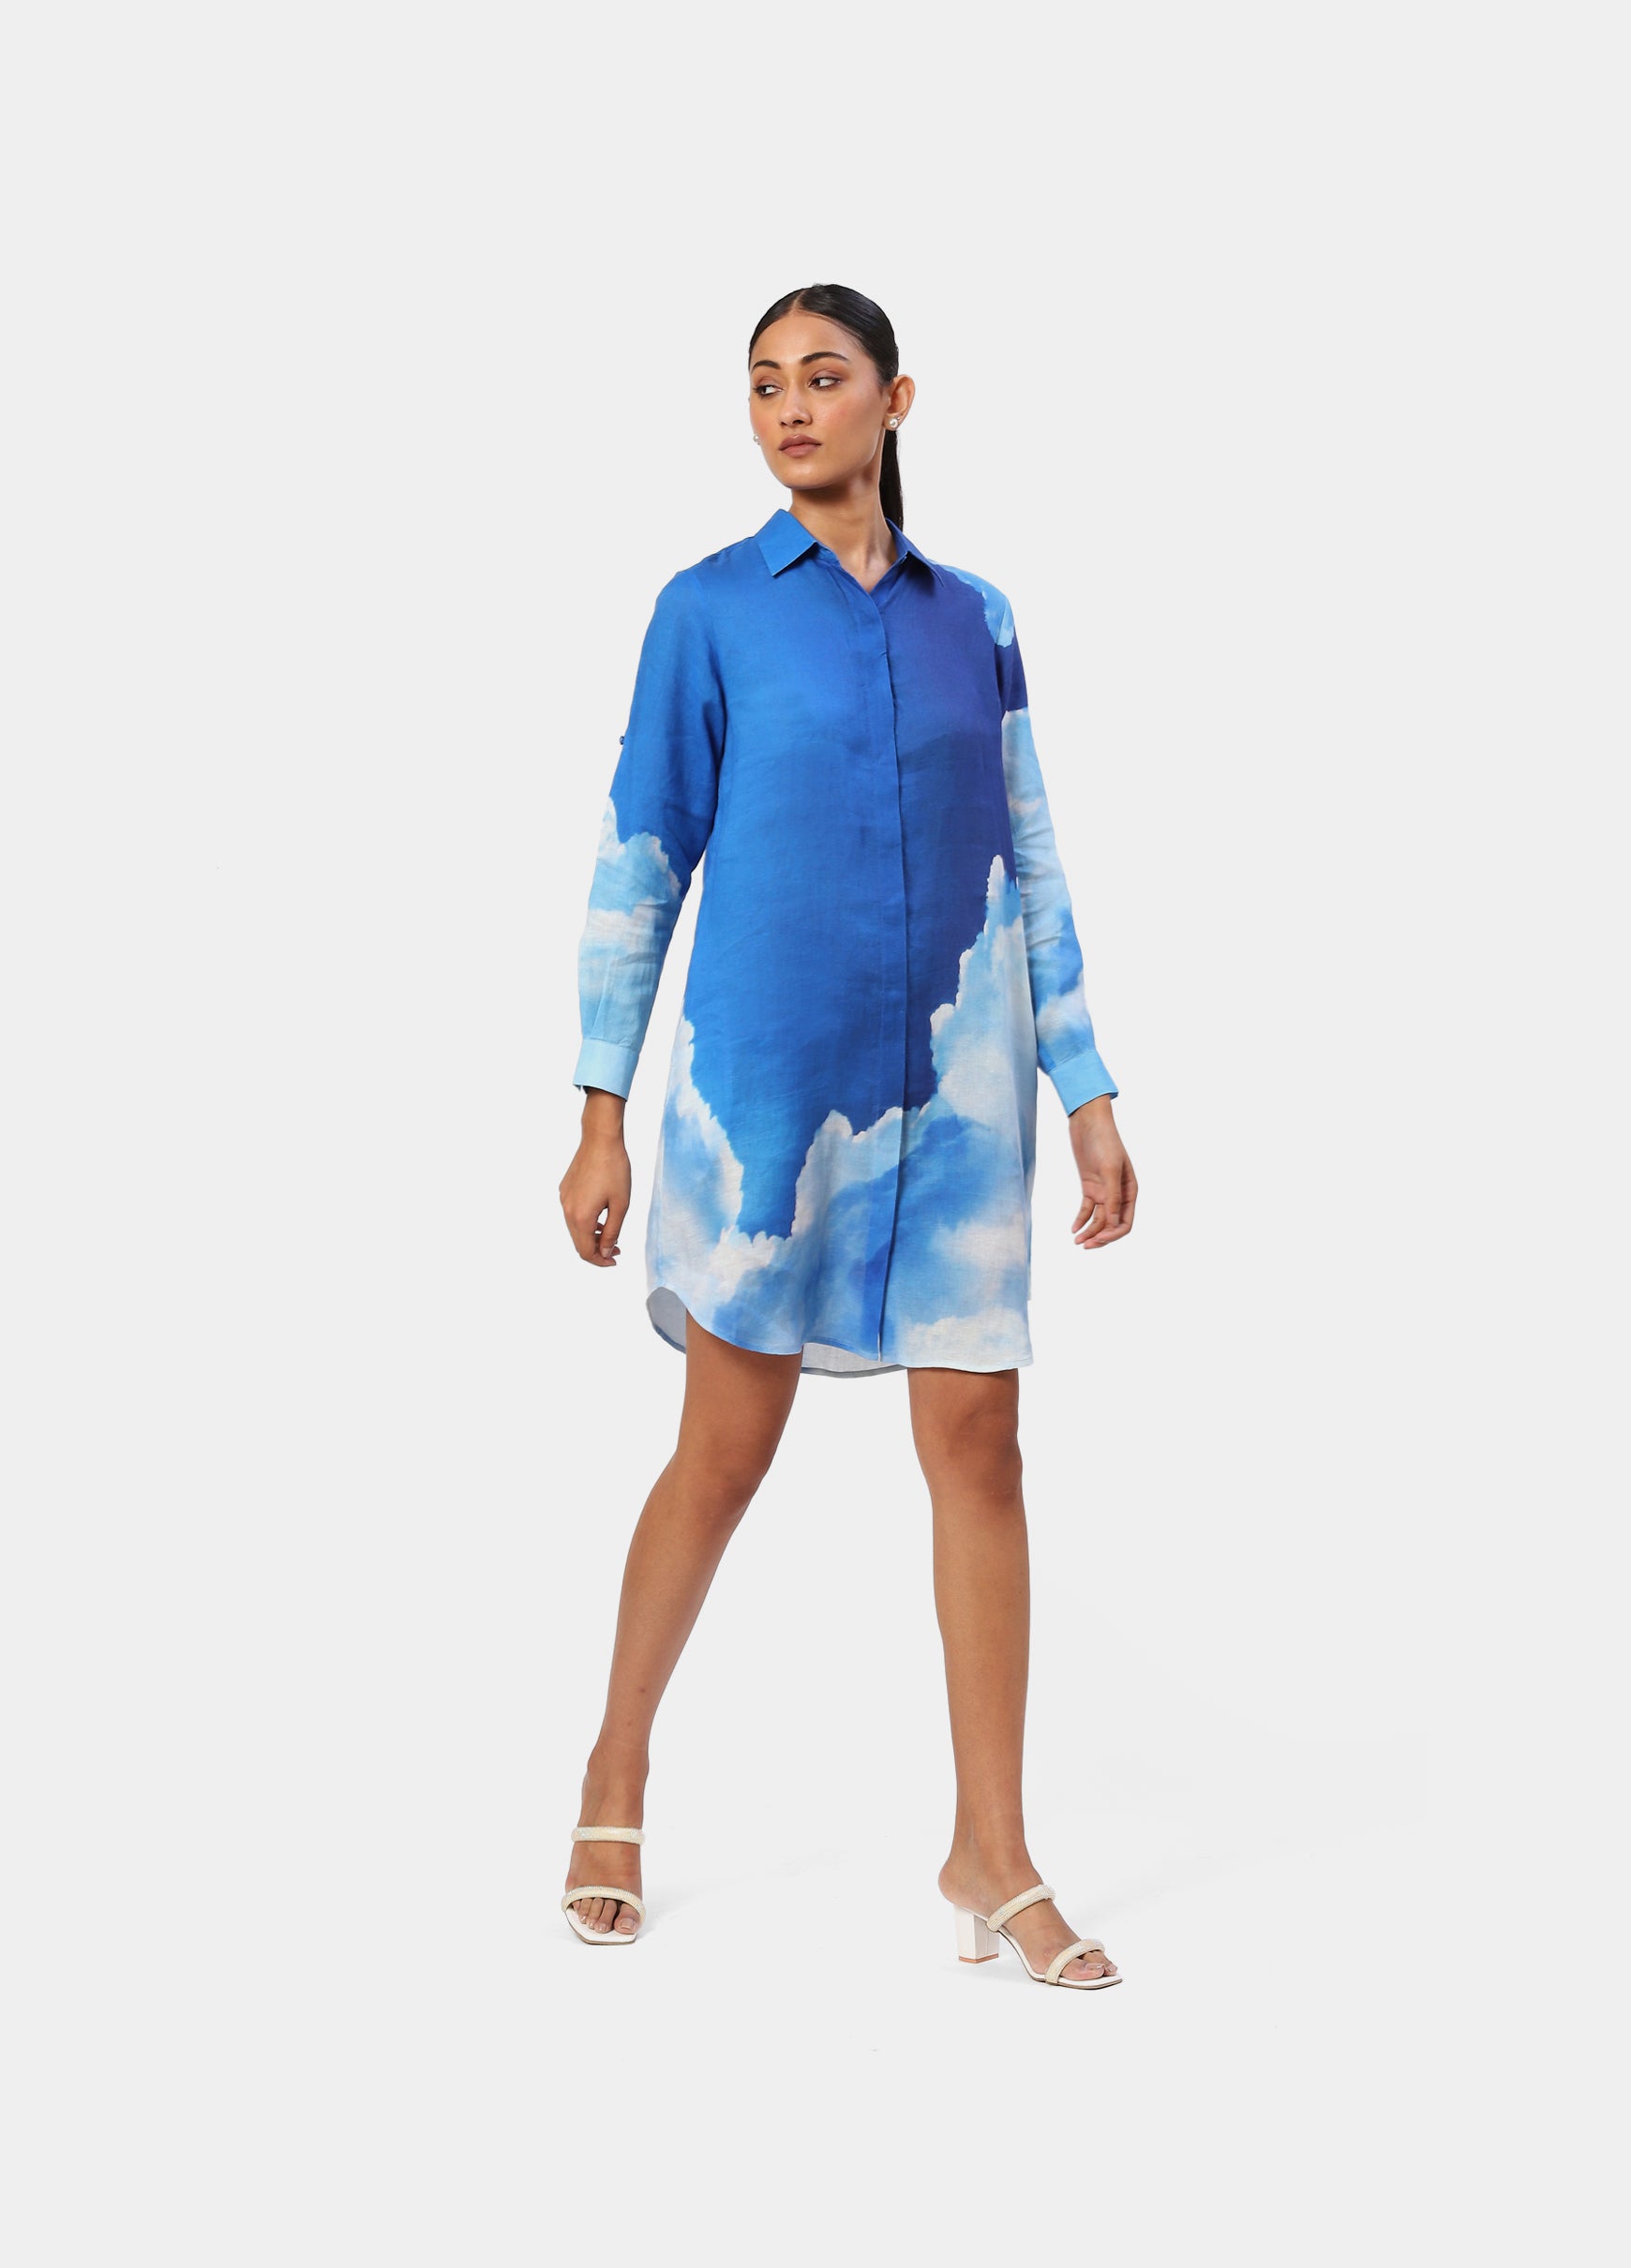 The Blue Linen Maldives Tunic